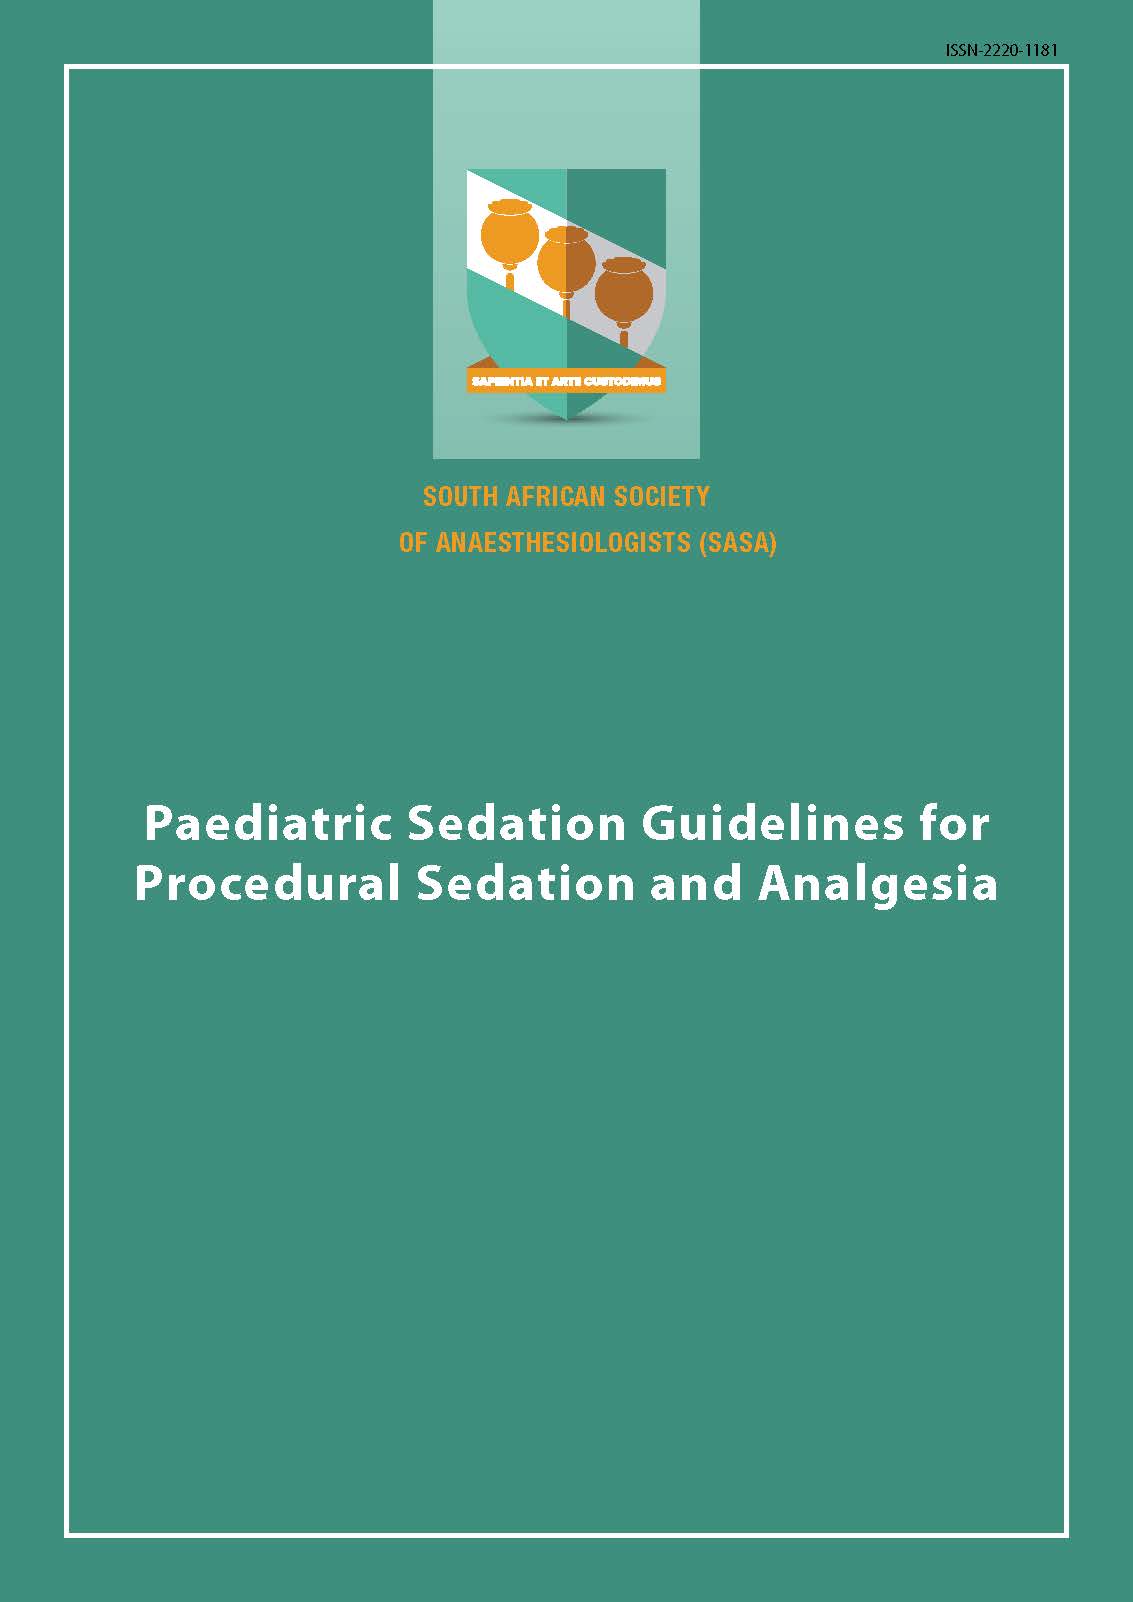 					View SASA Paediatric Sedation Guidelines for Procedural Sedation and Analgesia
				